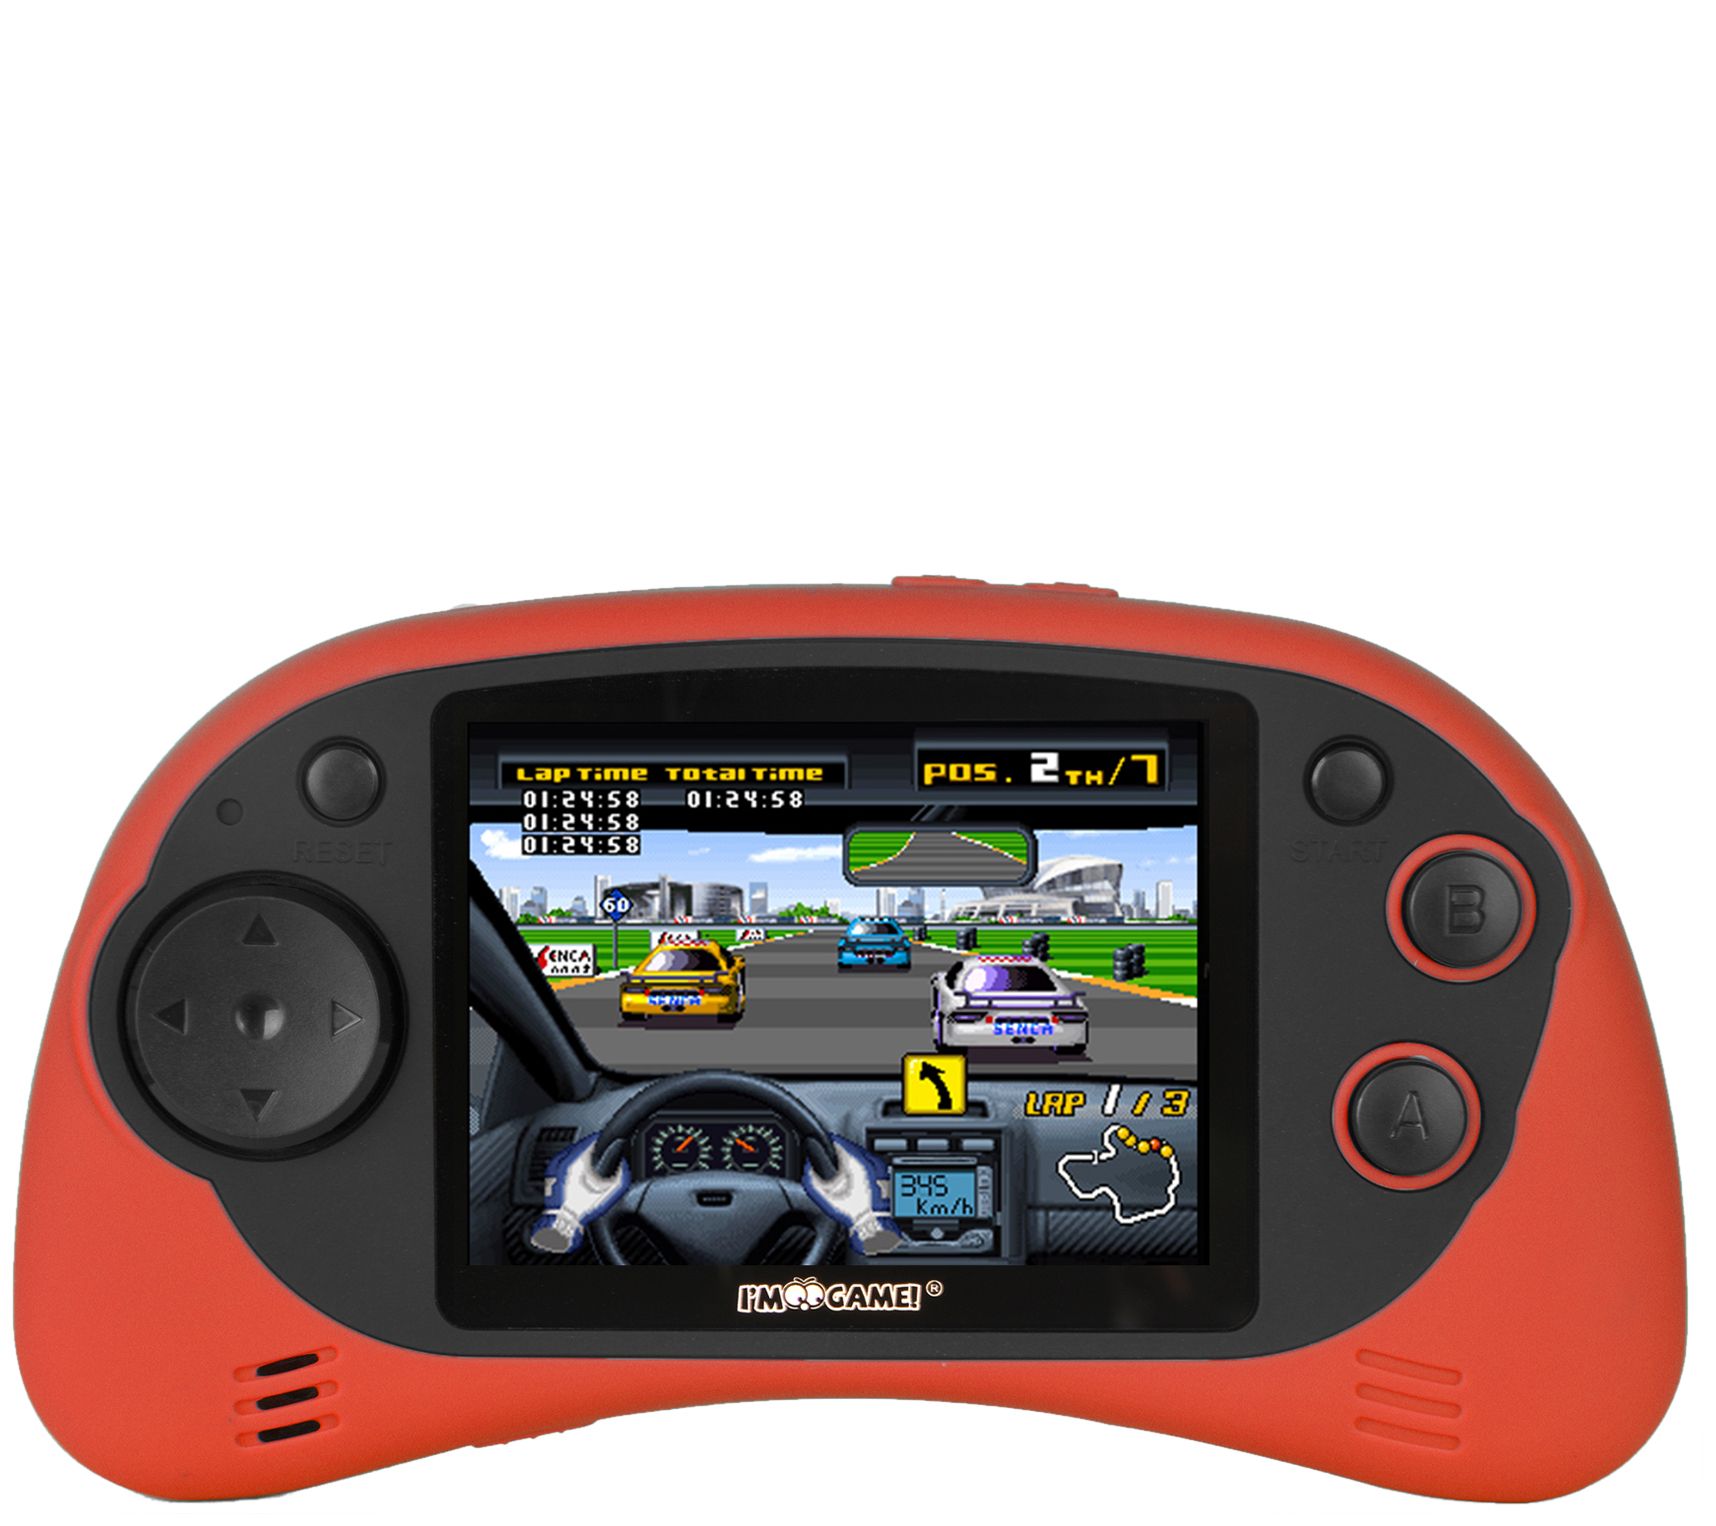 I'm Game GP120 Handheld Game Player - Red